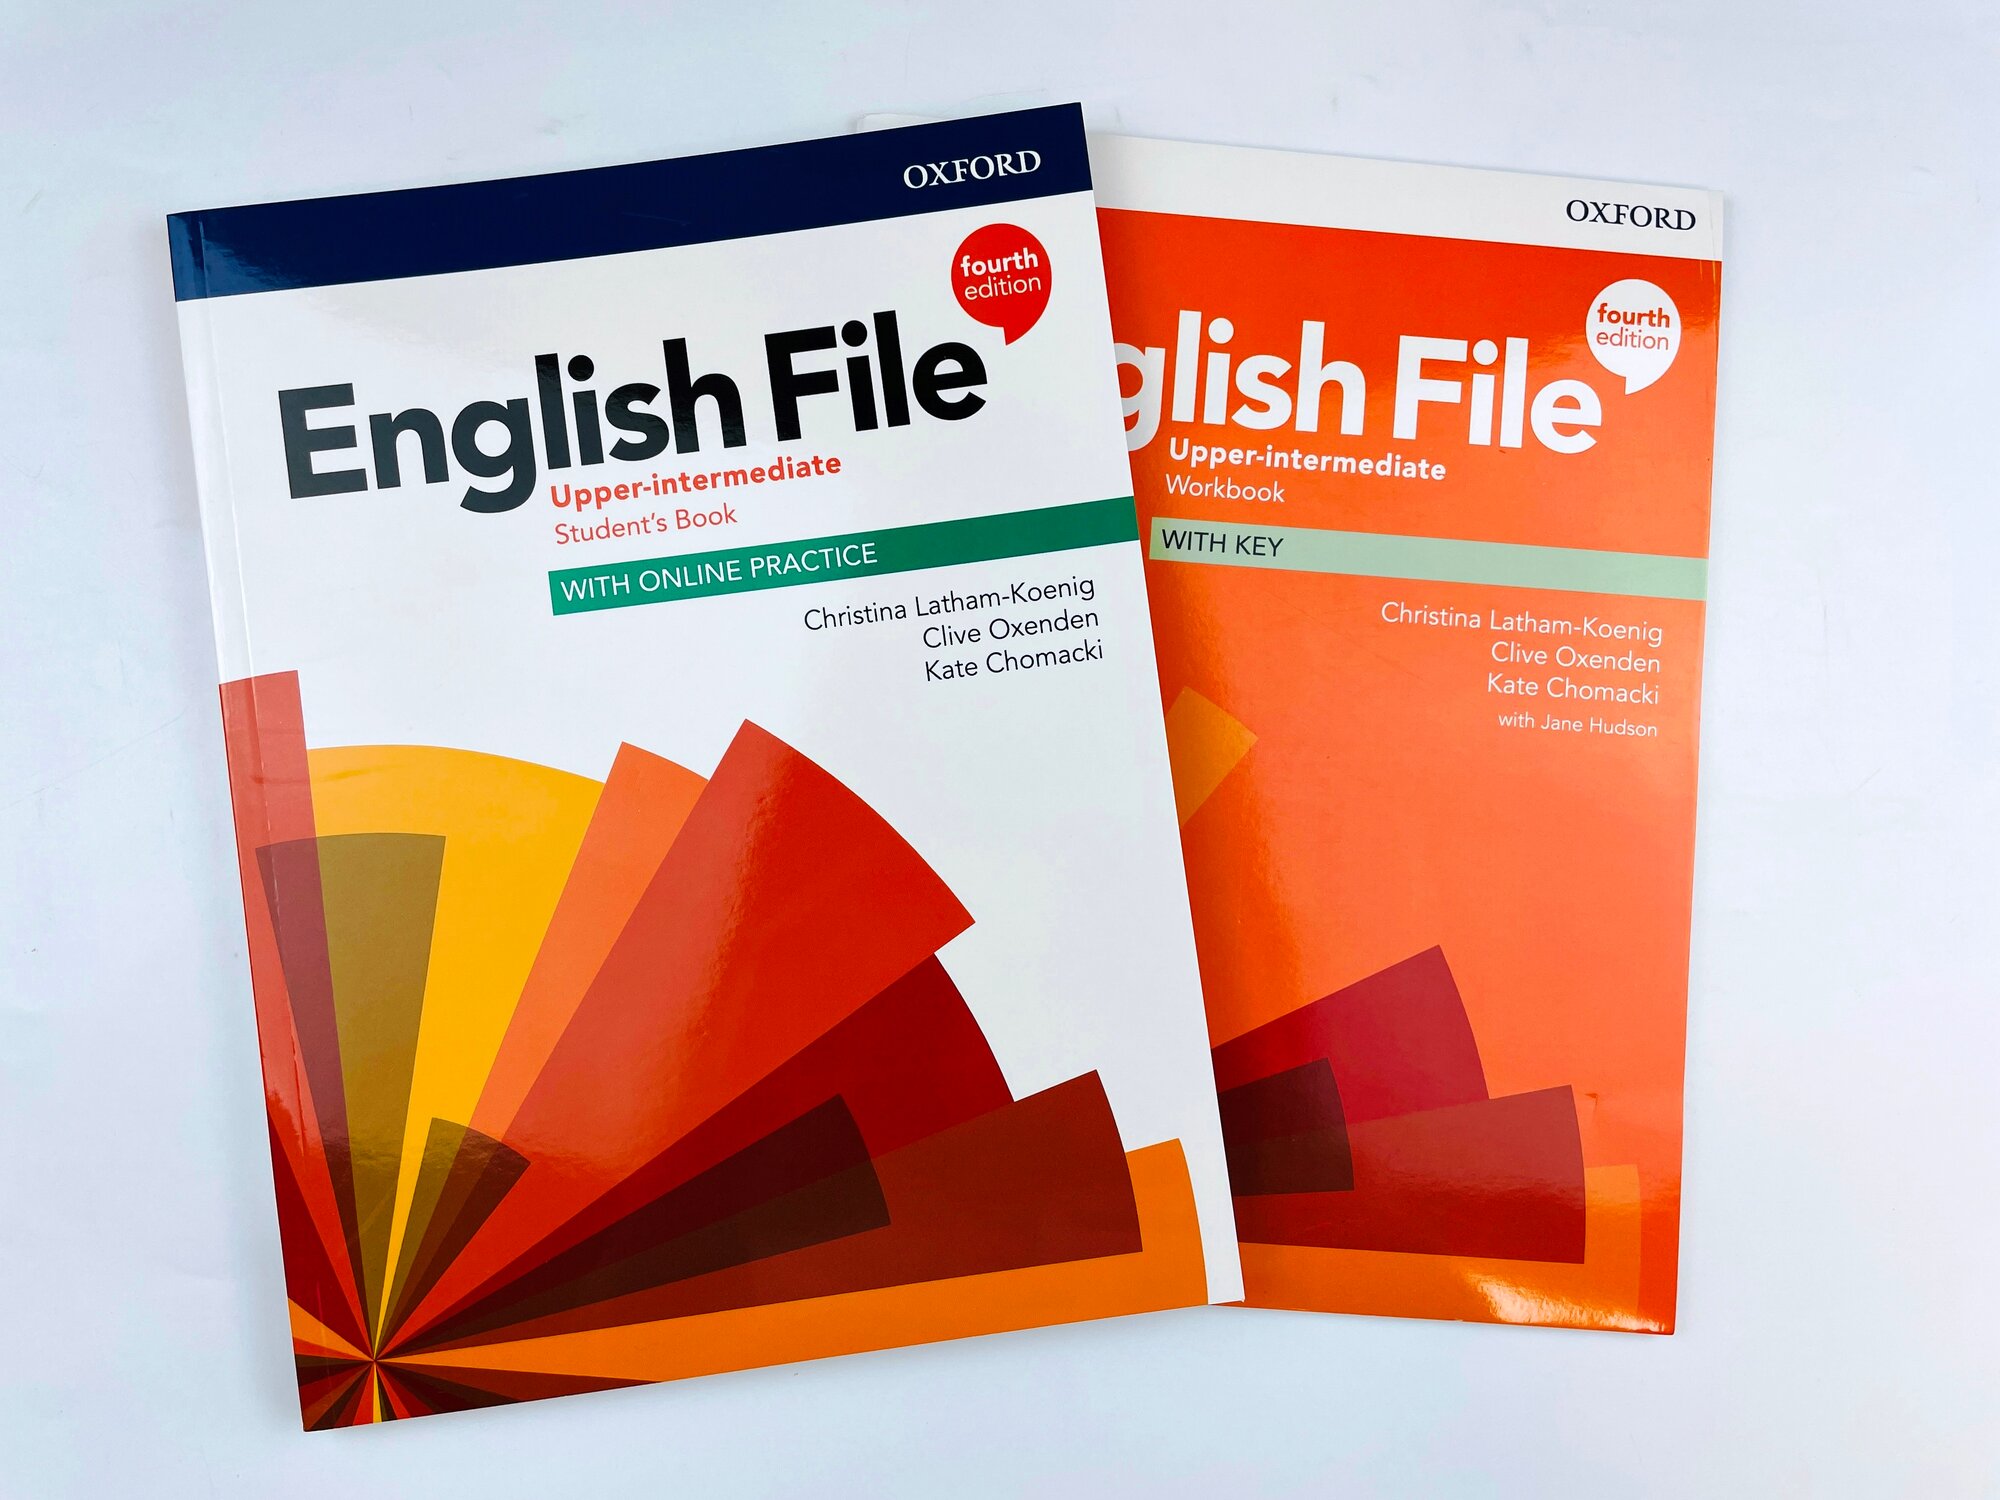 English file Upper-Intermediate (4th edition) Student's Book + Workbook +DVD